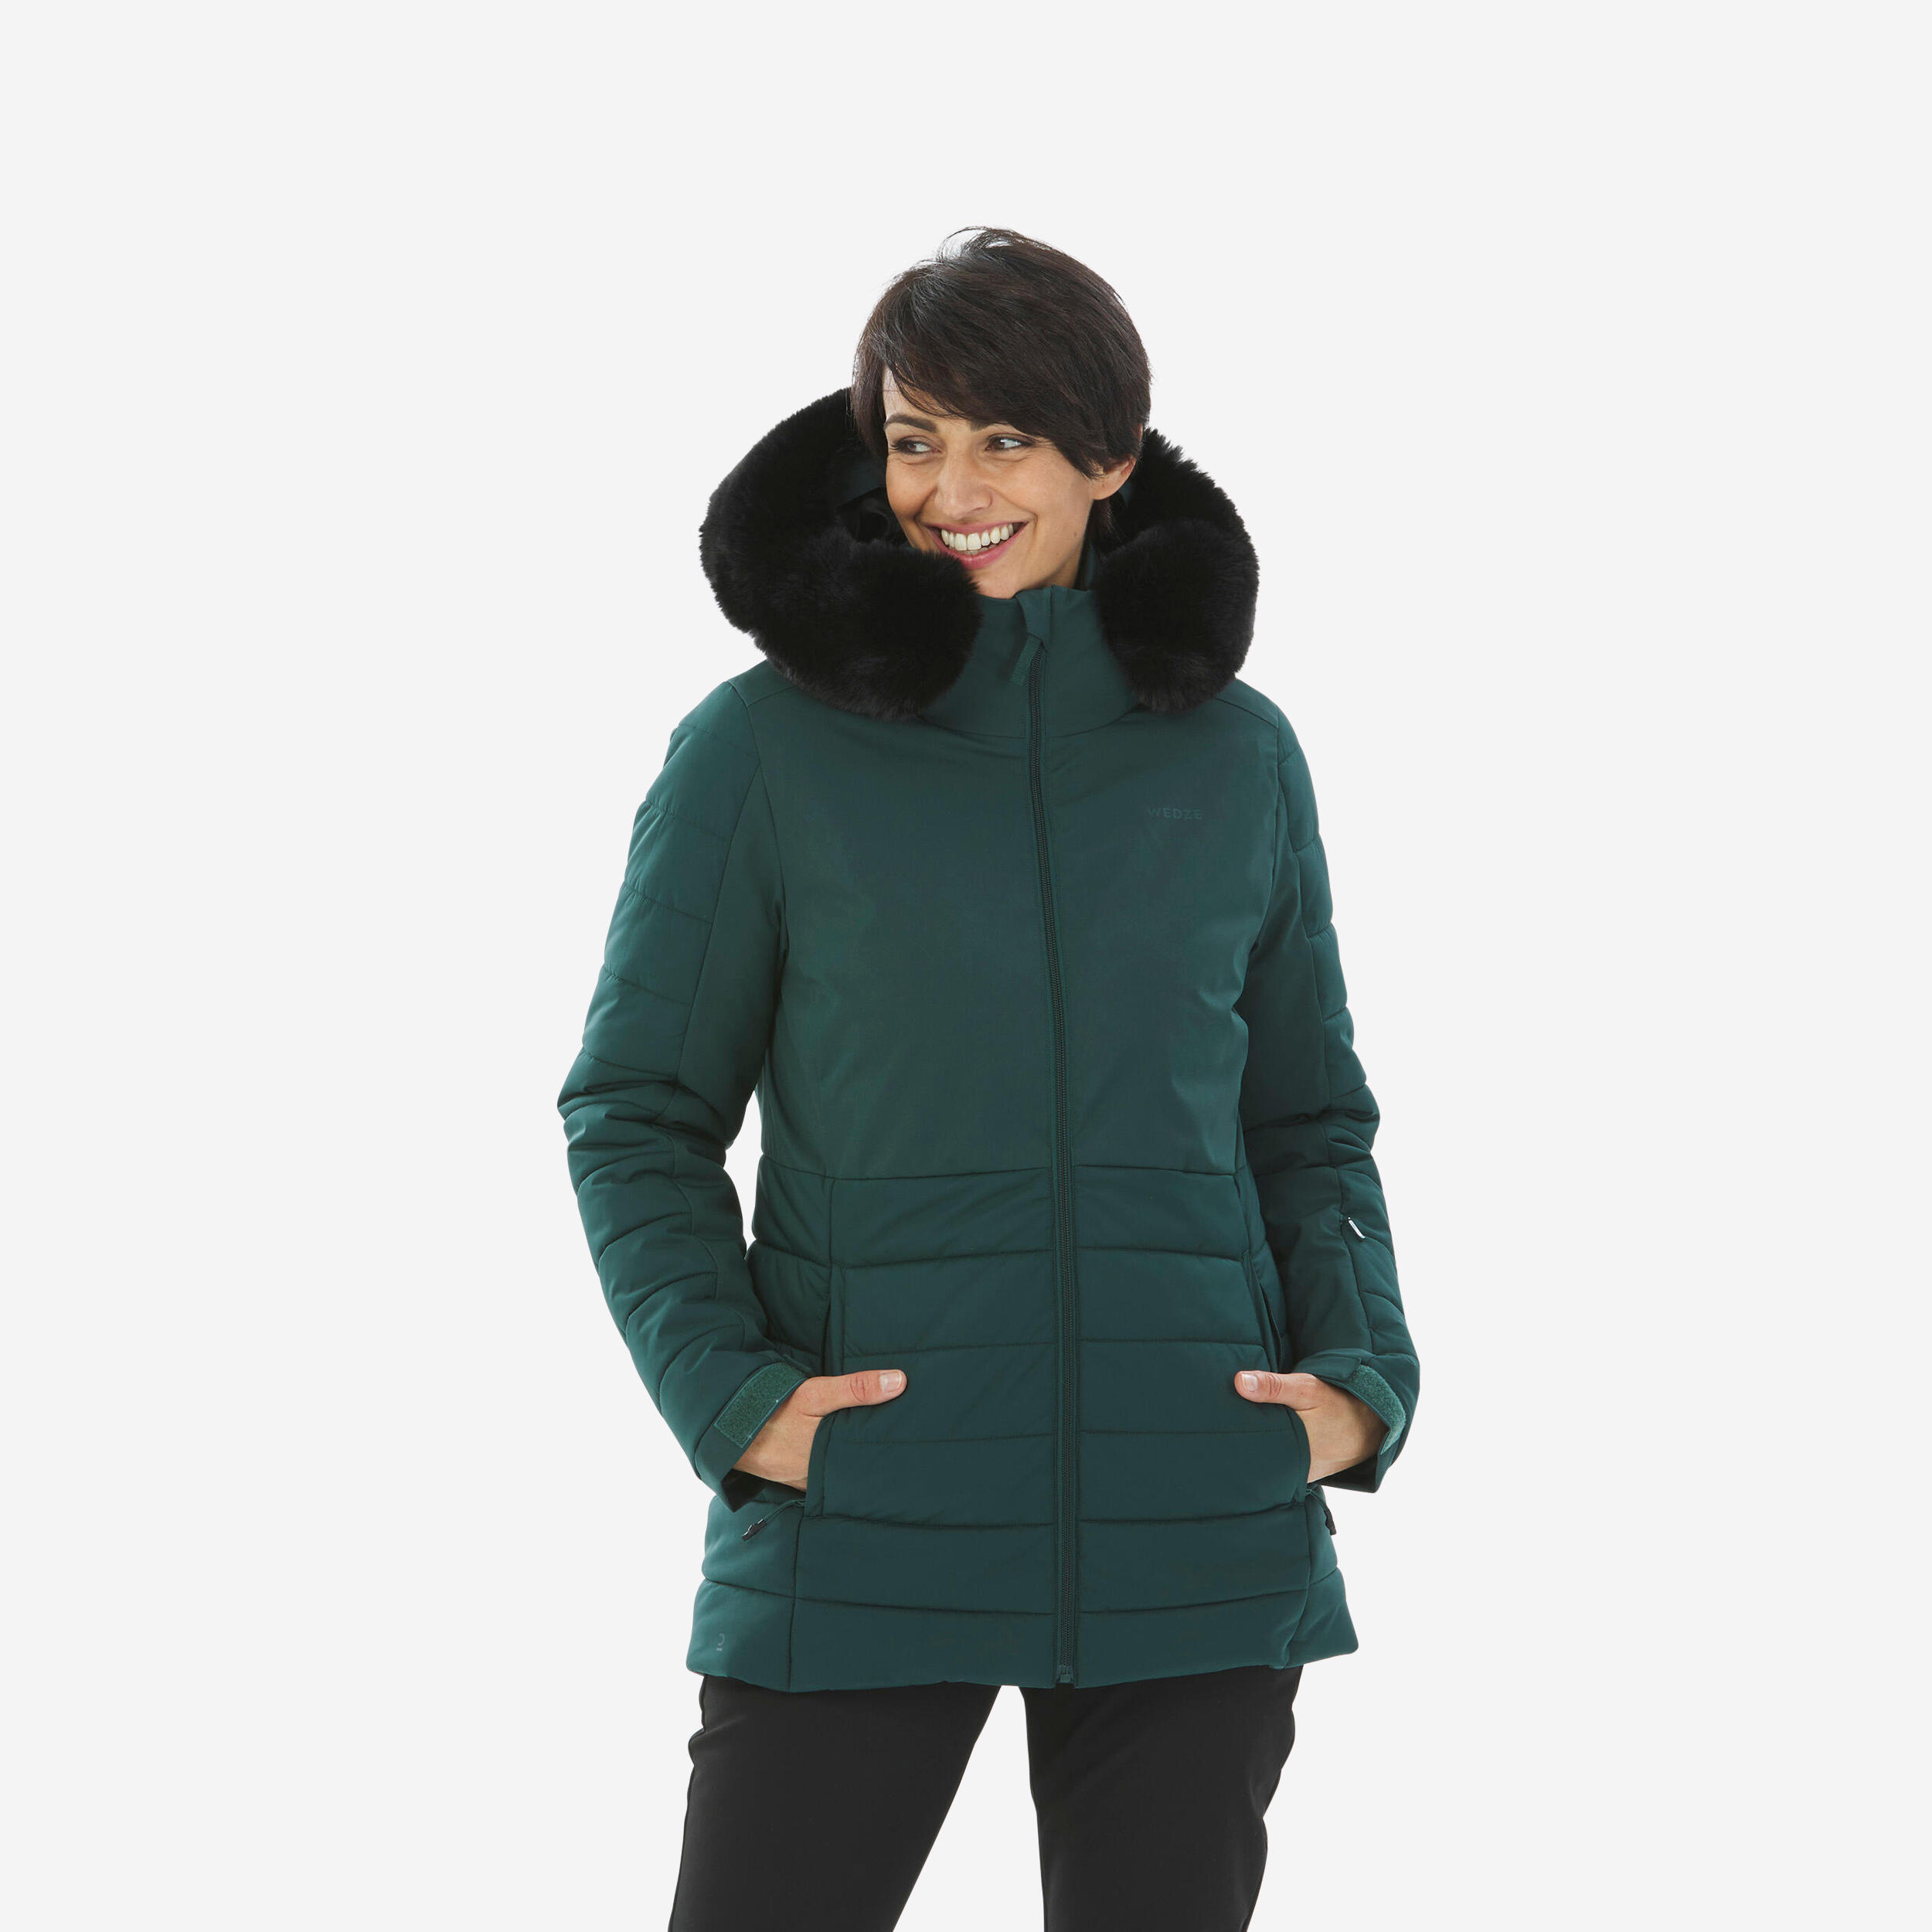 Women's Mid-Length Warm Ski Jacket 100 - Green 1/12